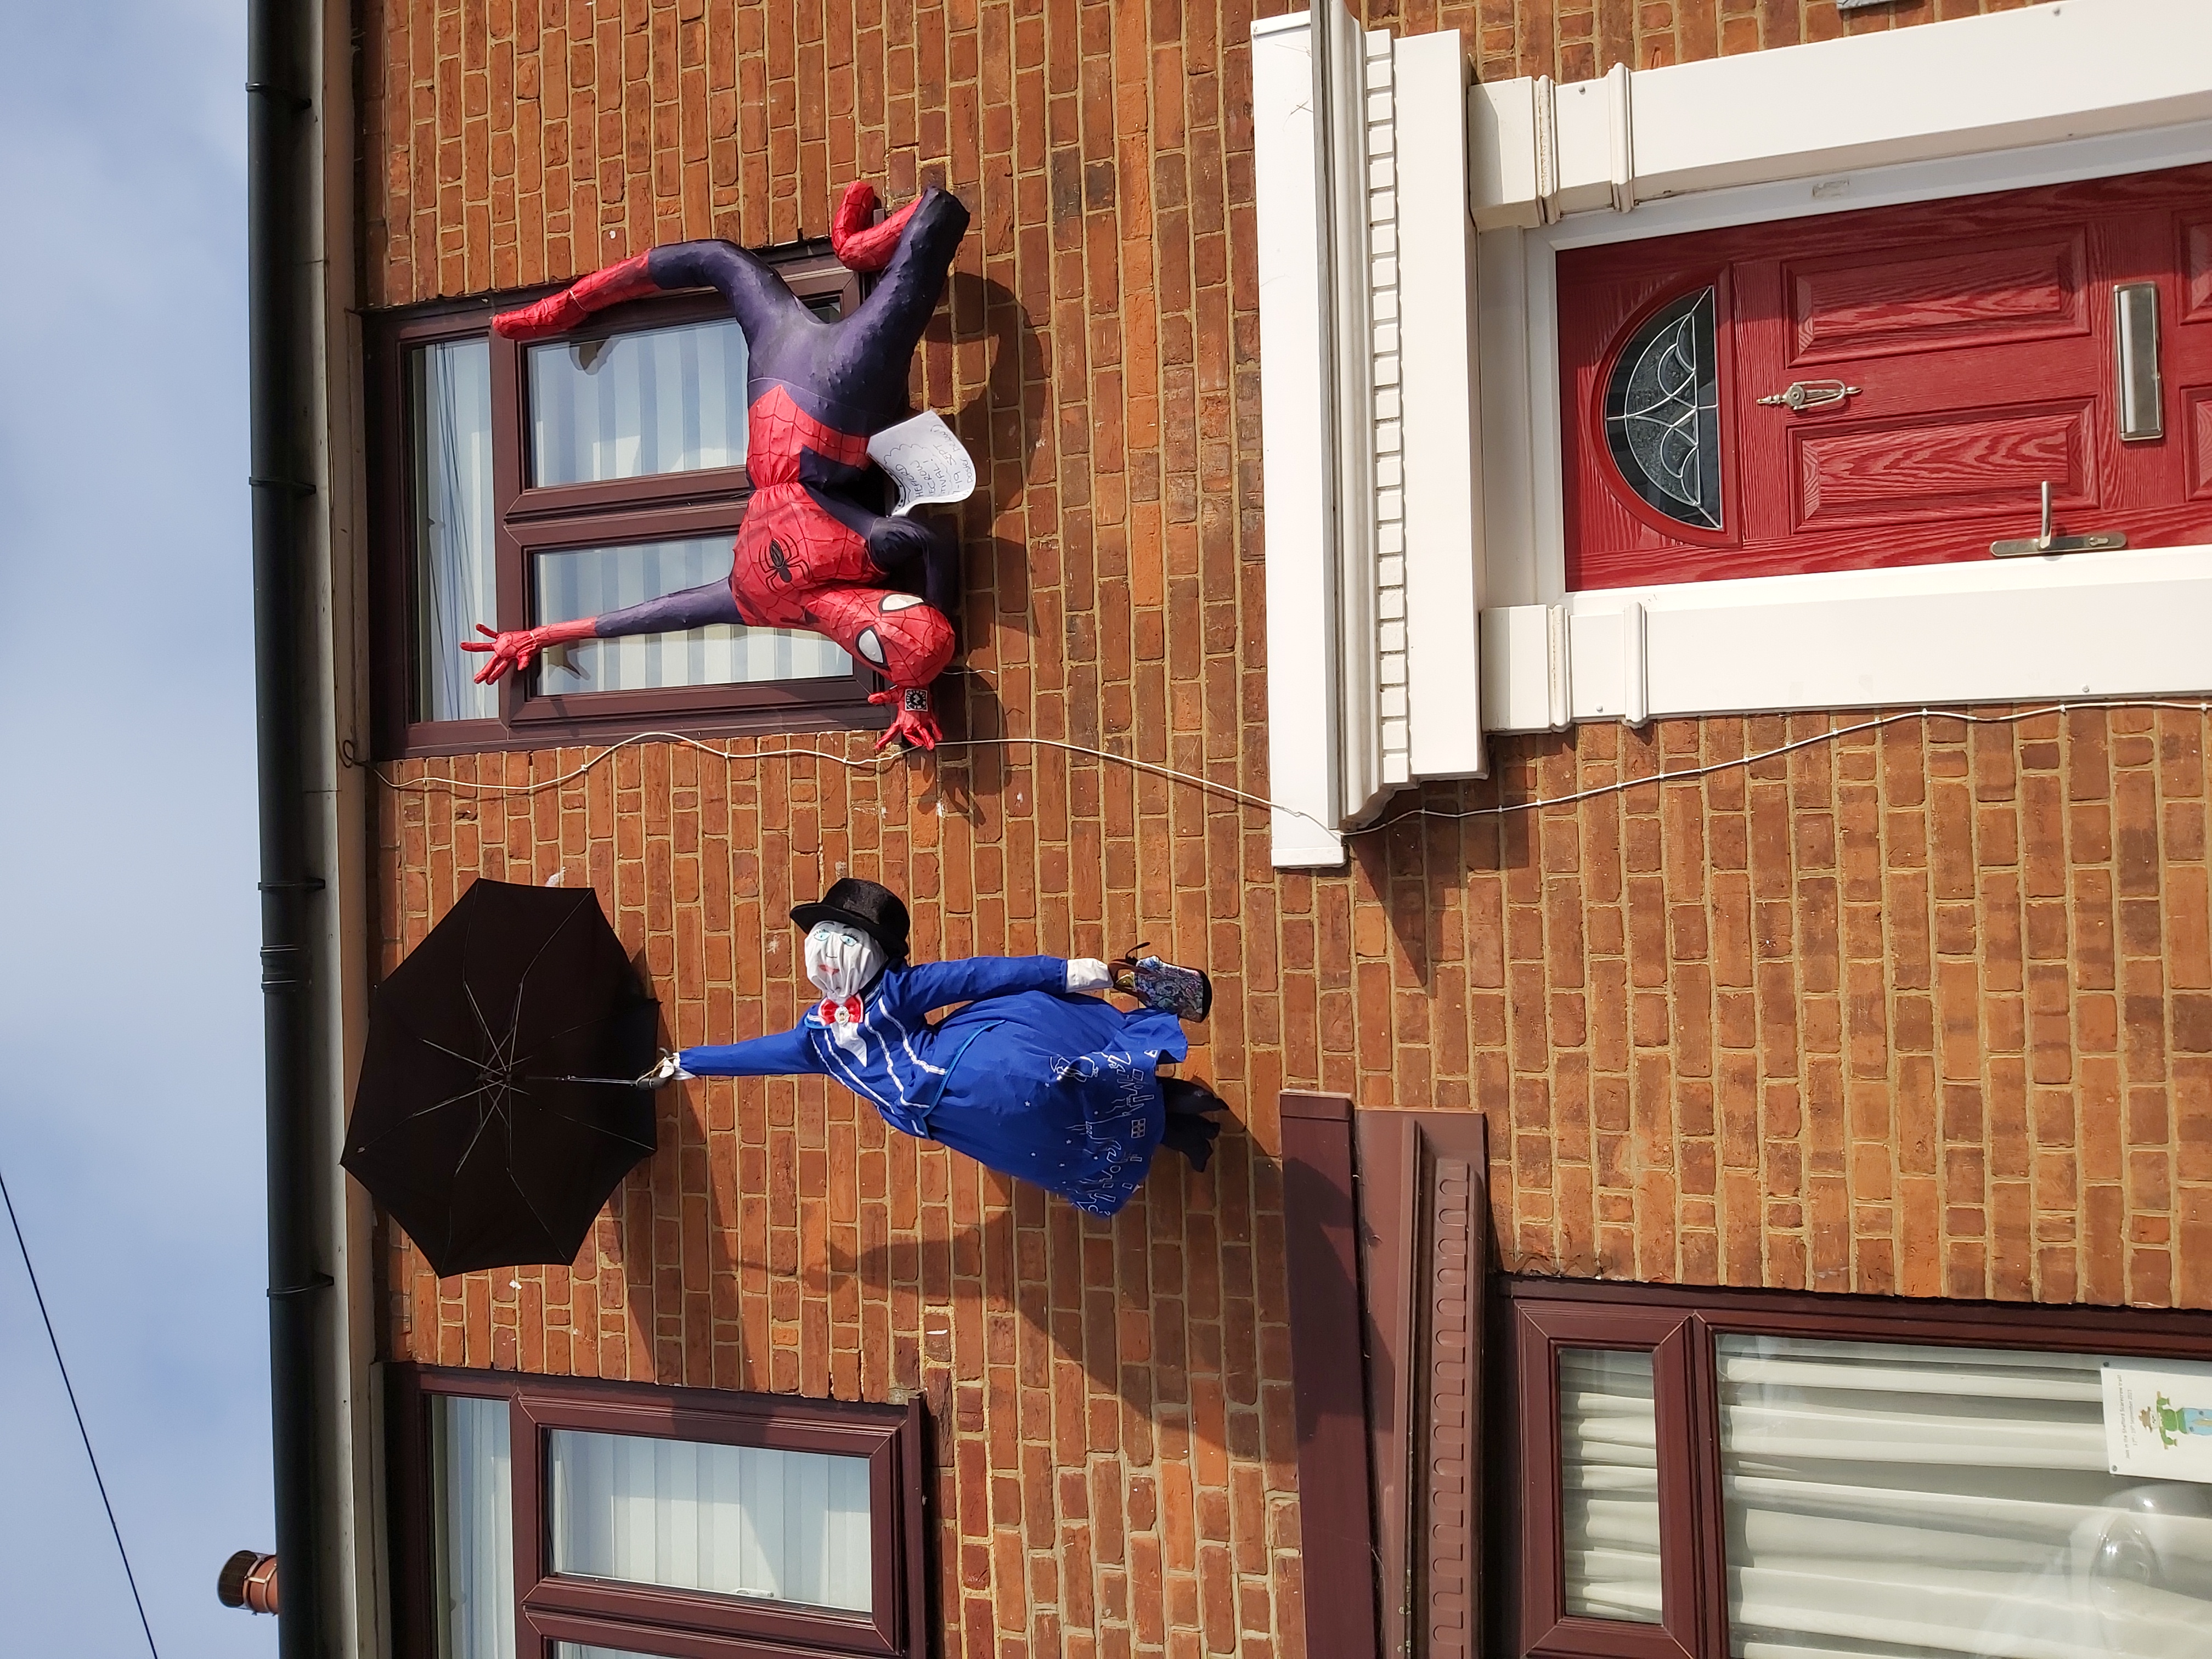 Mary Poppins vs Spiderman